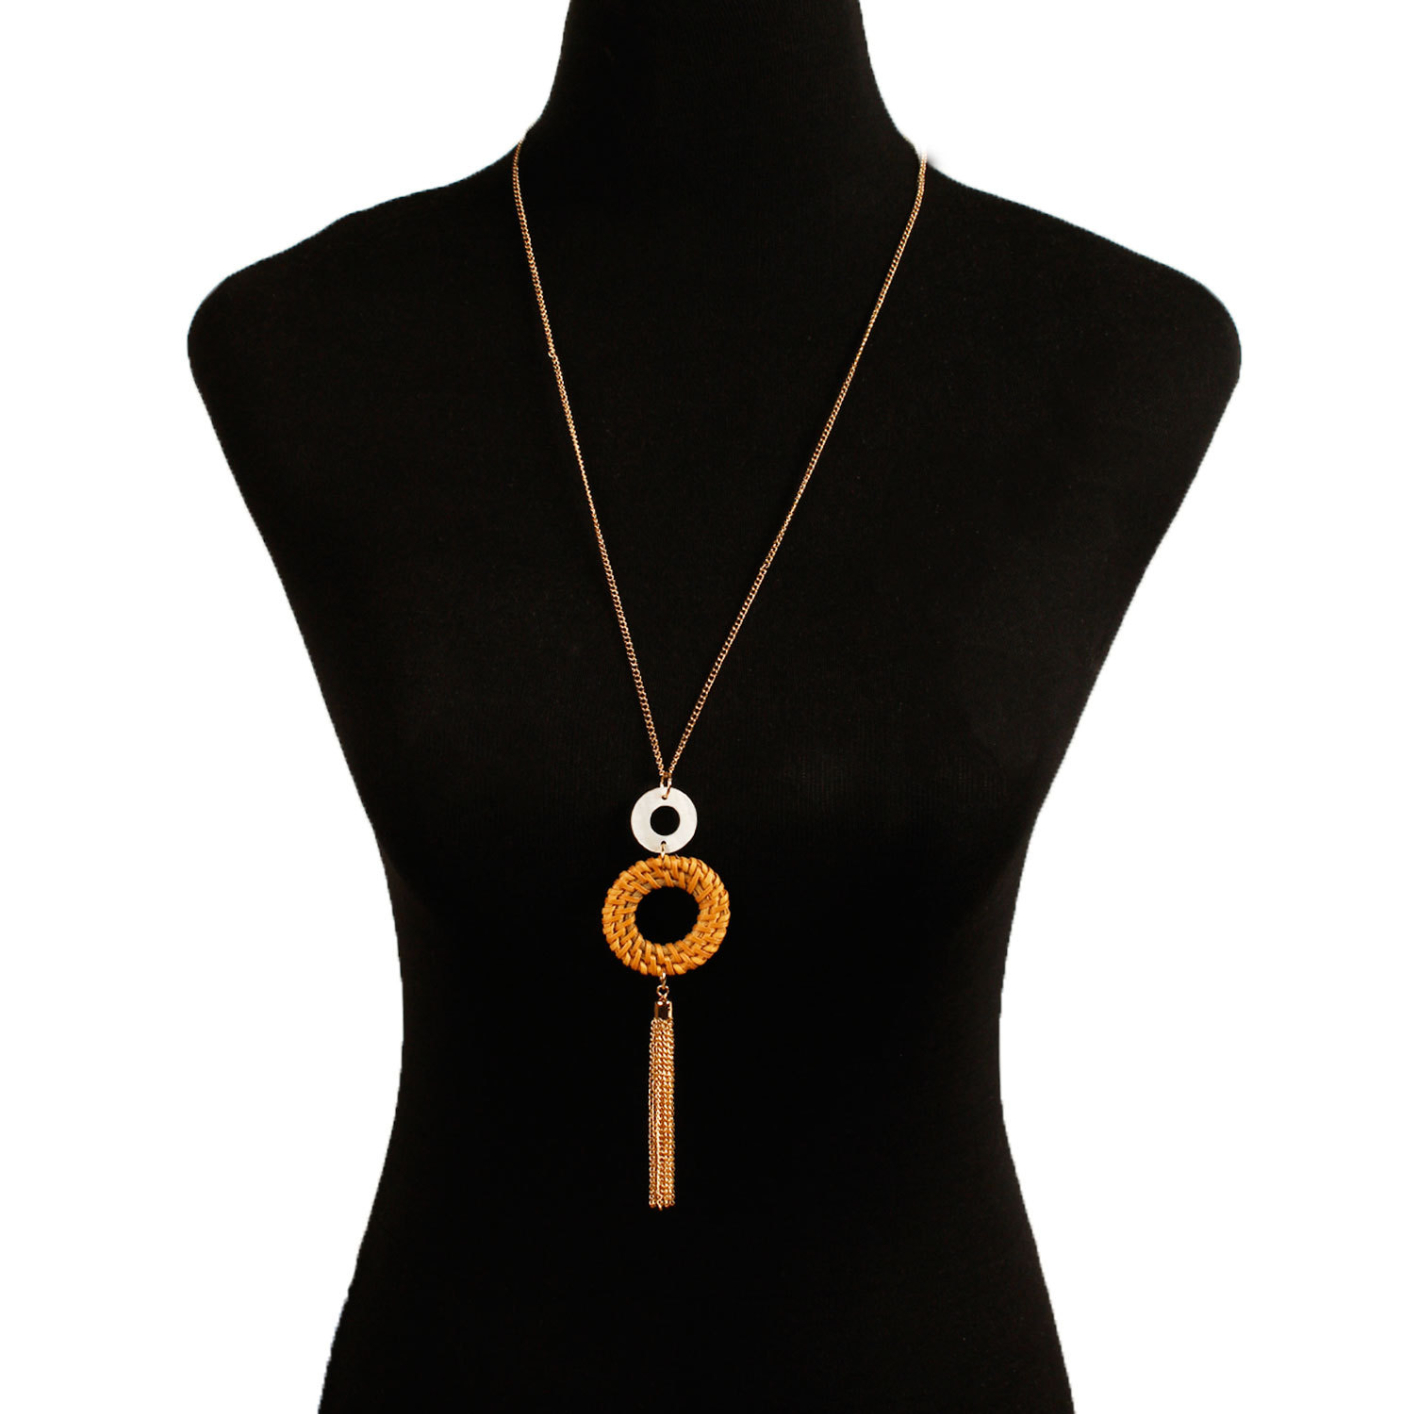 ZW1754 tassel pendant women's necklace handmade grass wicker weave statement pendant y-shaped long chain necklace girls